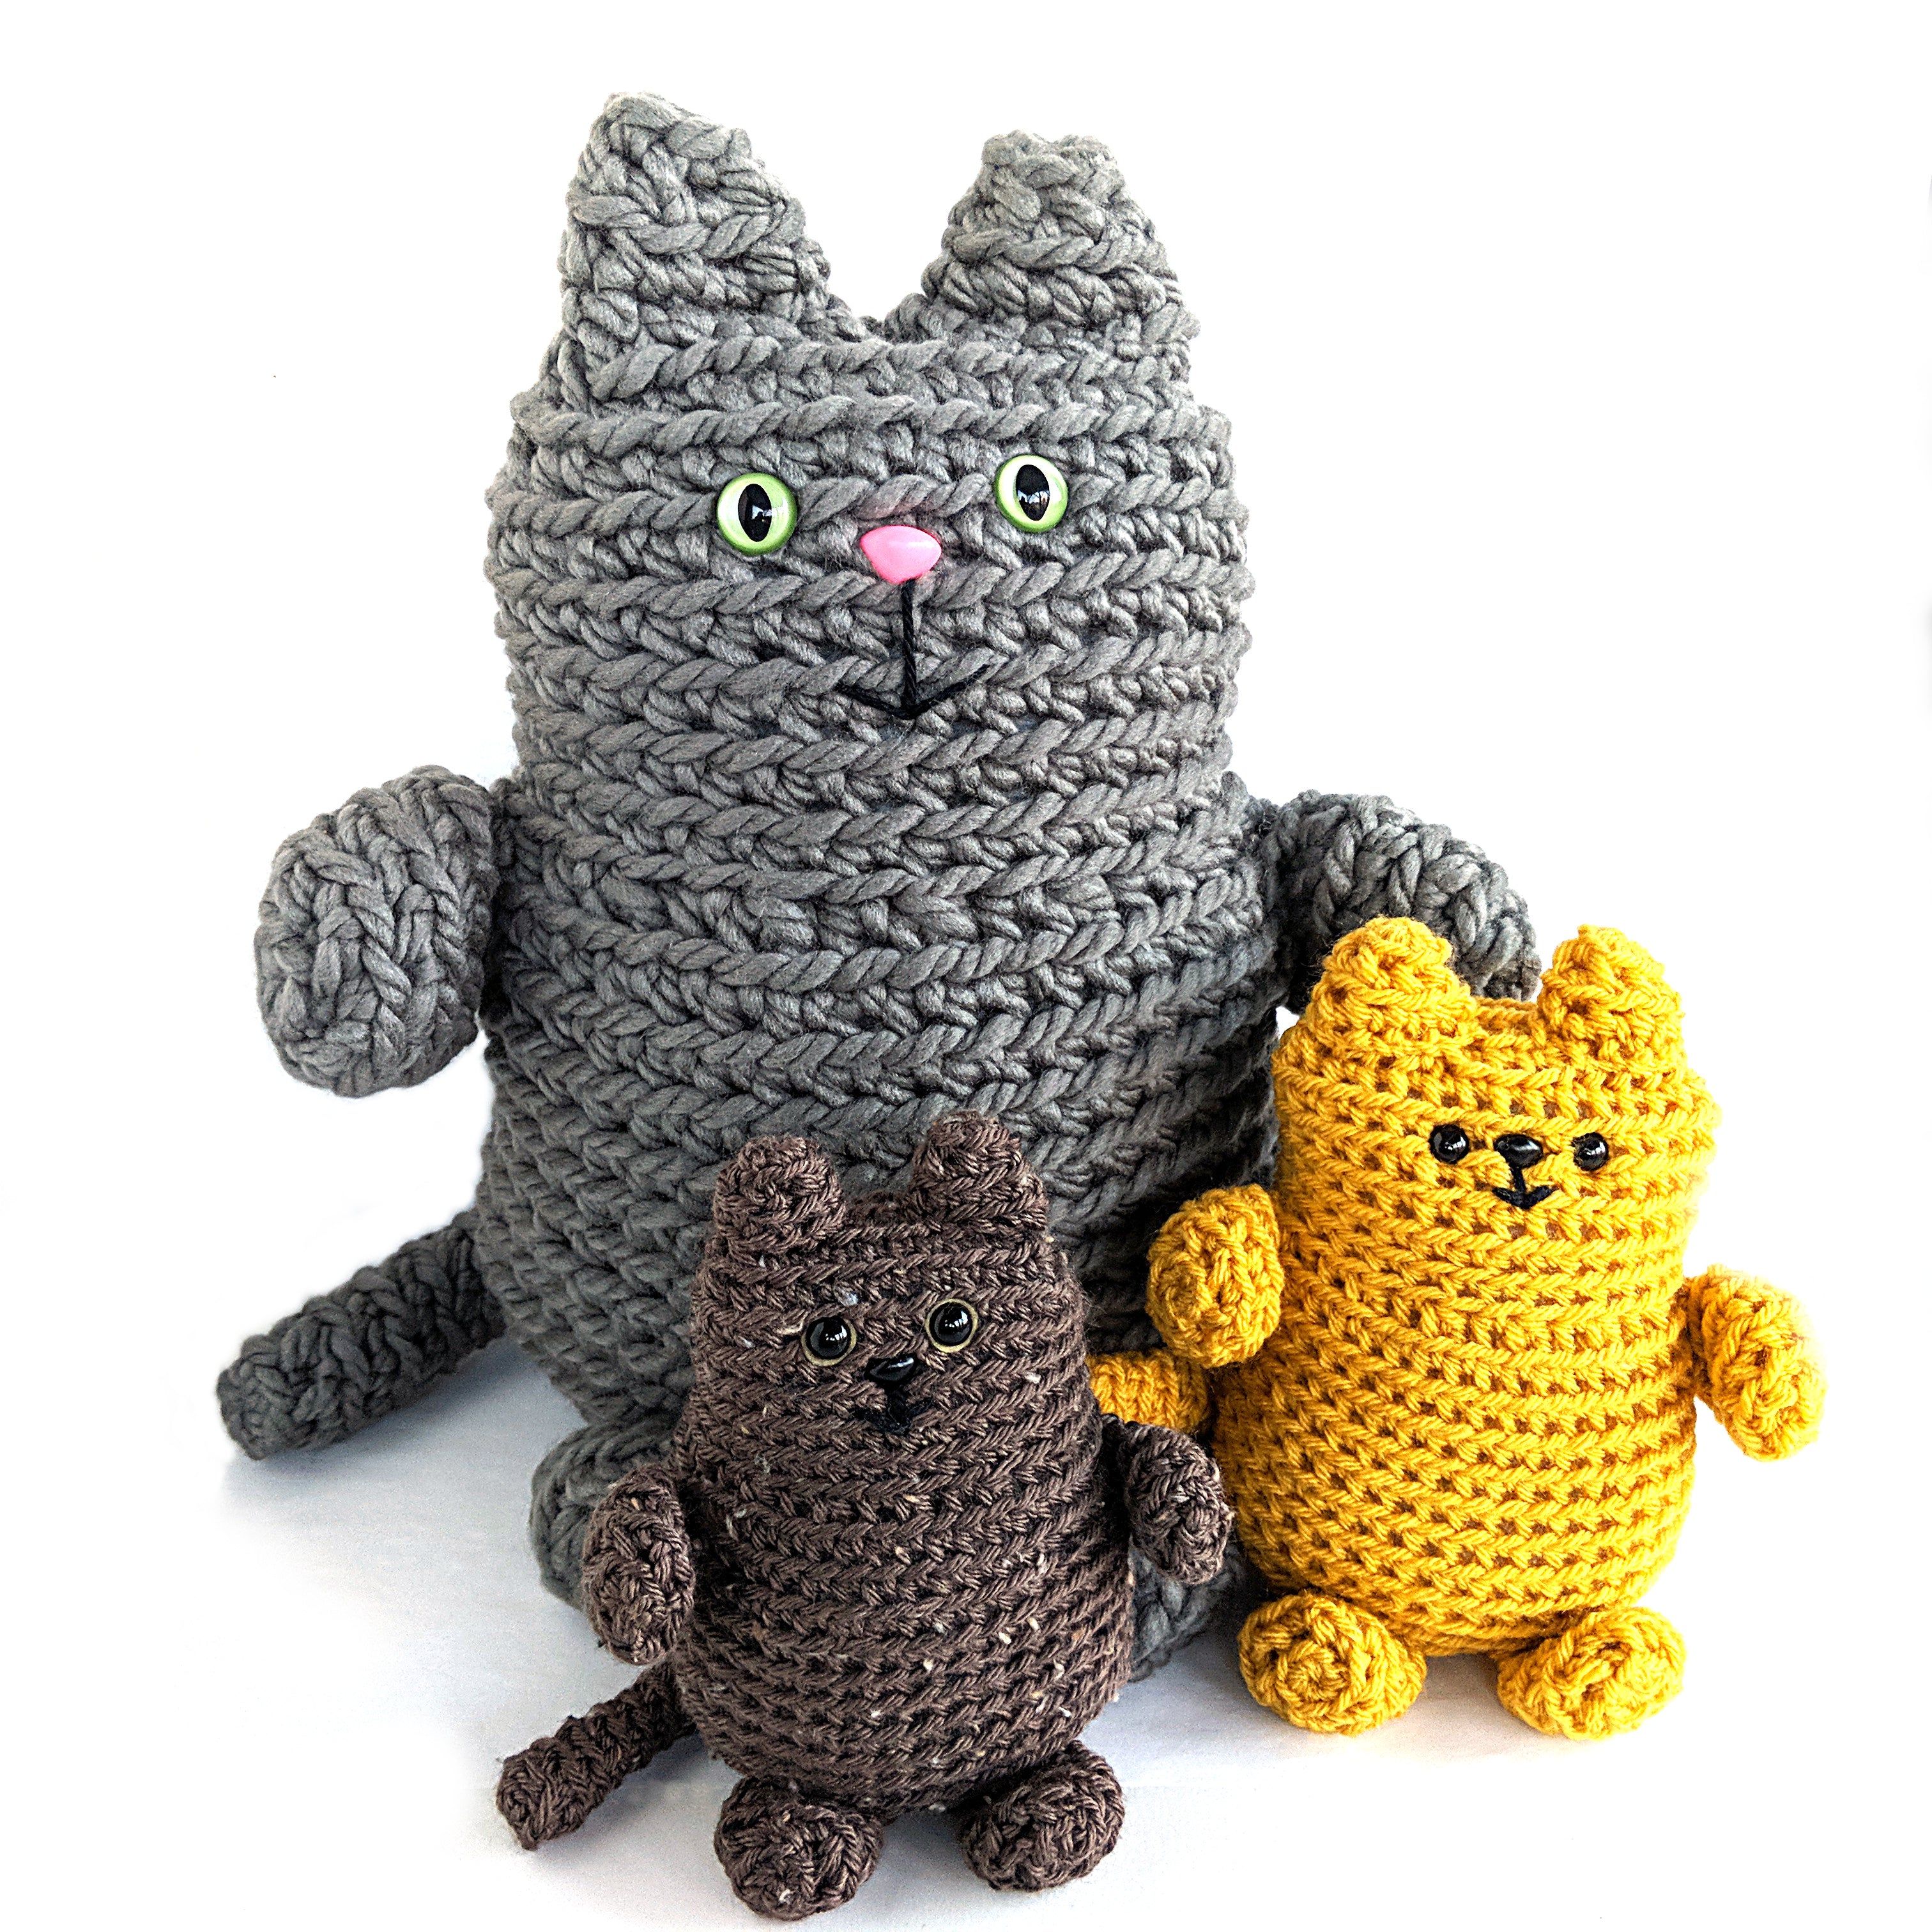 Felix the Fat Cat Crochet Amigurumi Pattern